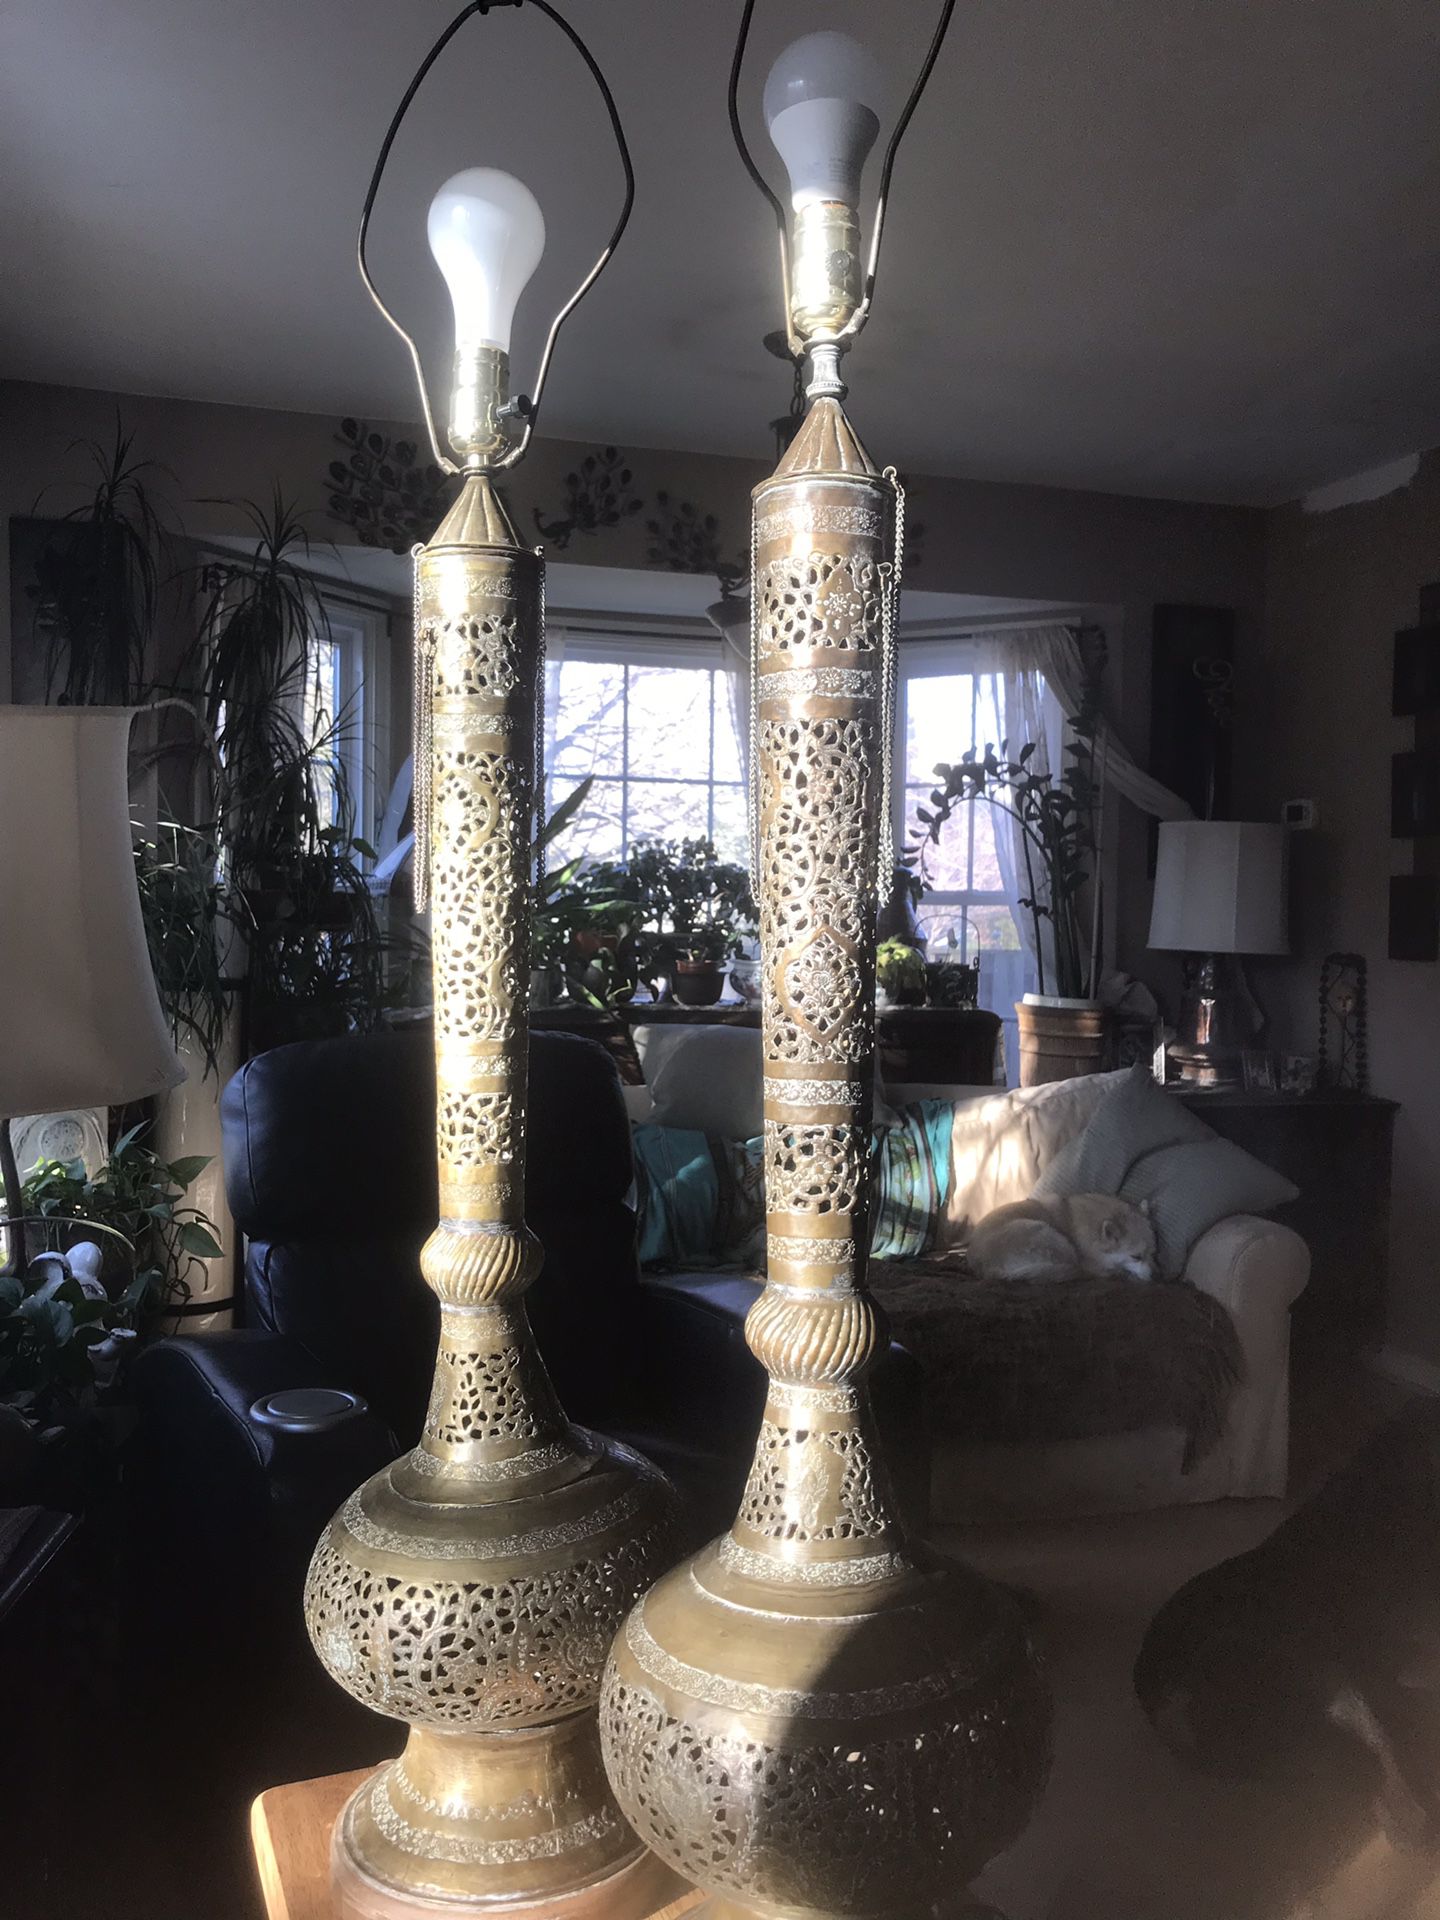 2 vintage rare mid century style brass lamps